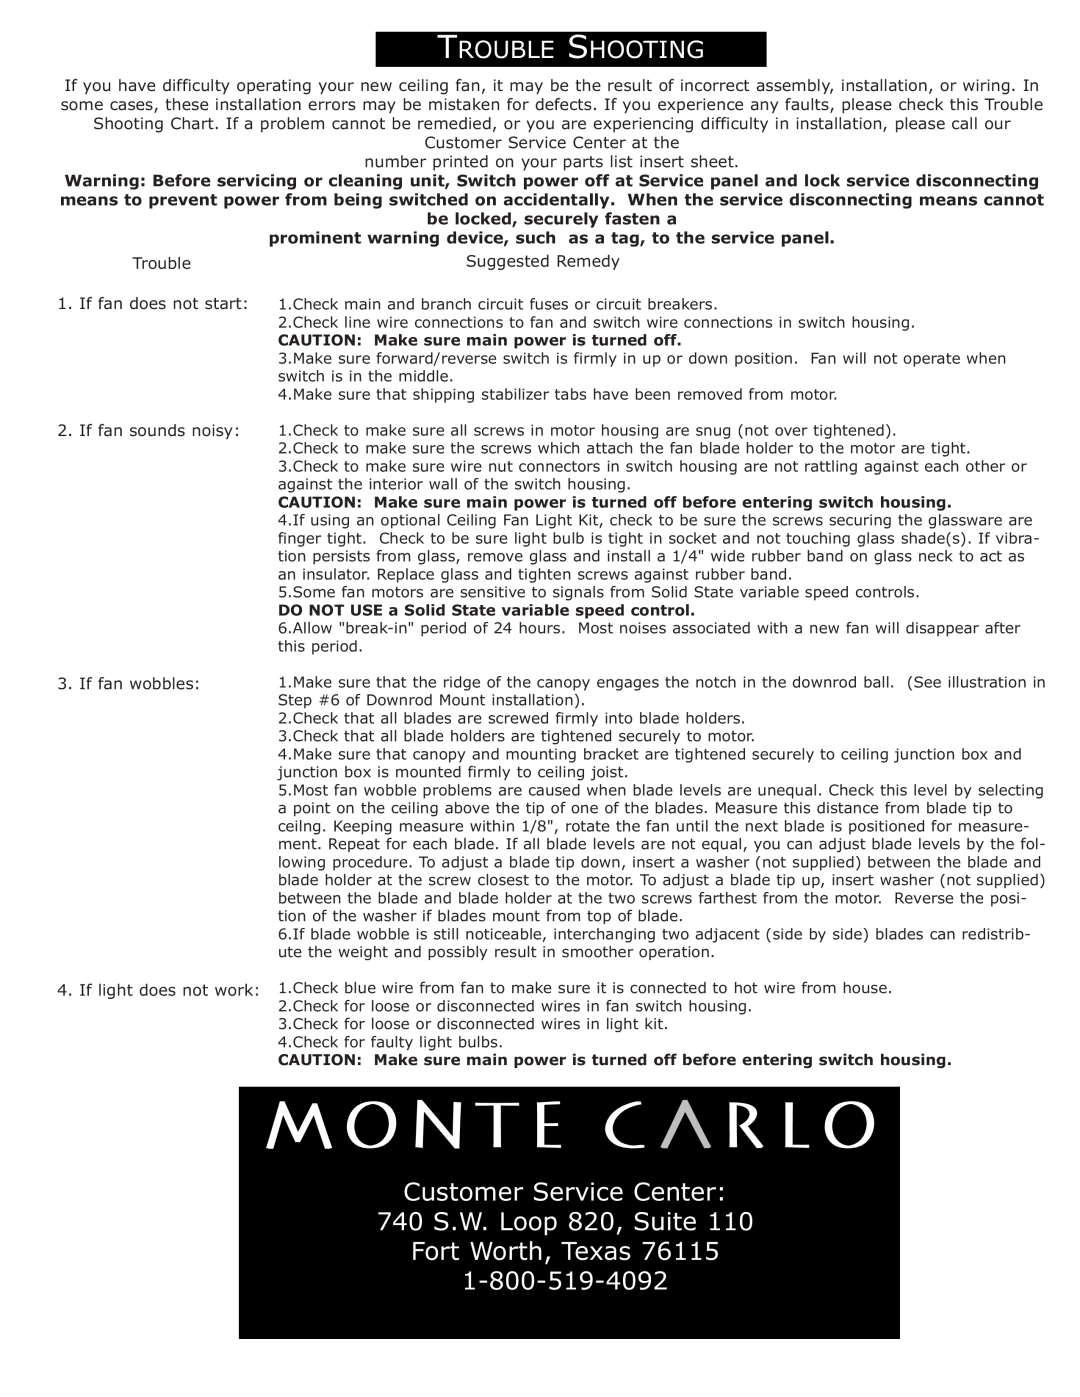 Monte Carlo Fan Company 5MS52 be locked, securely fasten a, Trouble, Suggested Remedy, If fan does not start 